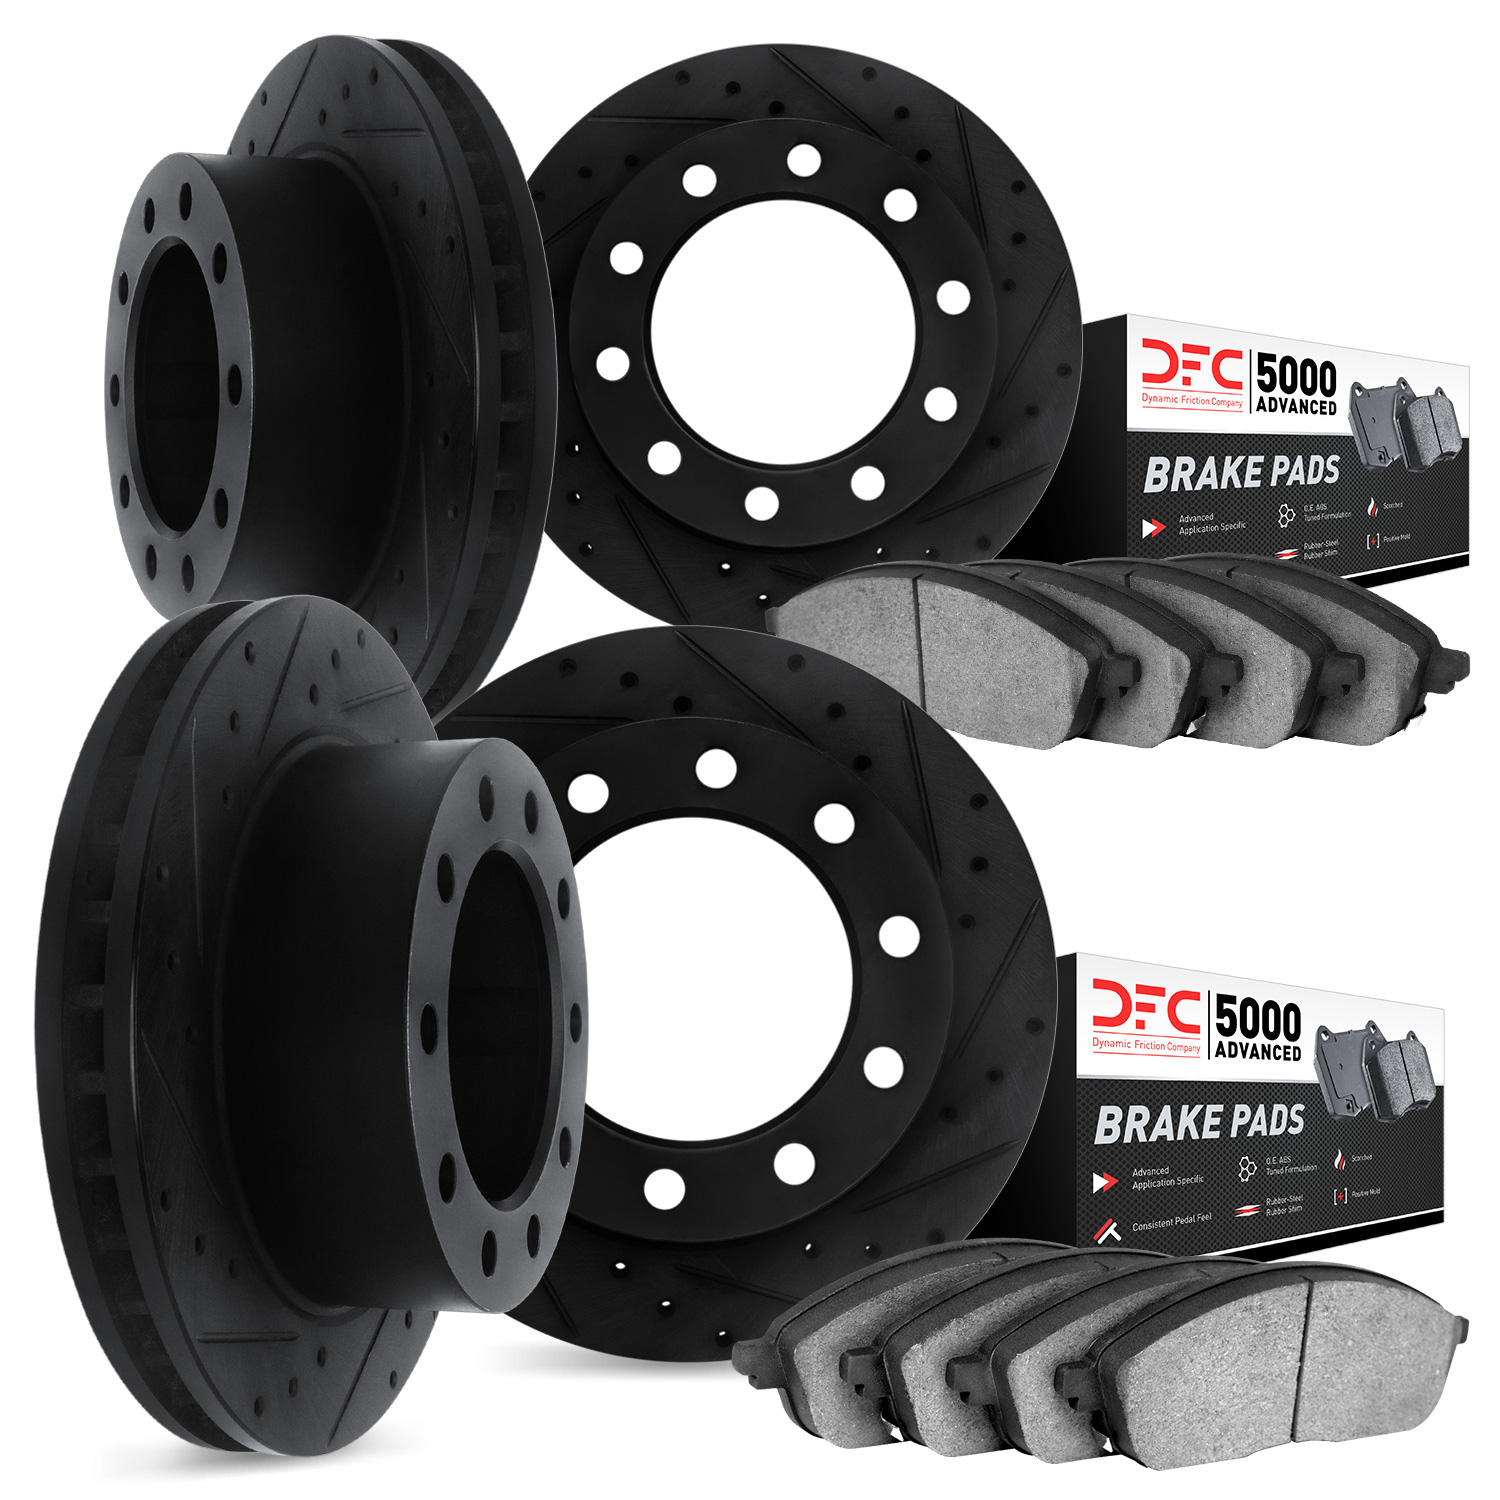 8504-40255 Drilled/Slotted Brake Rotors w/5000 Advanced Brake Pads Kit [Black], 2005-2017 Multiple Makes/Models, Position: Front